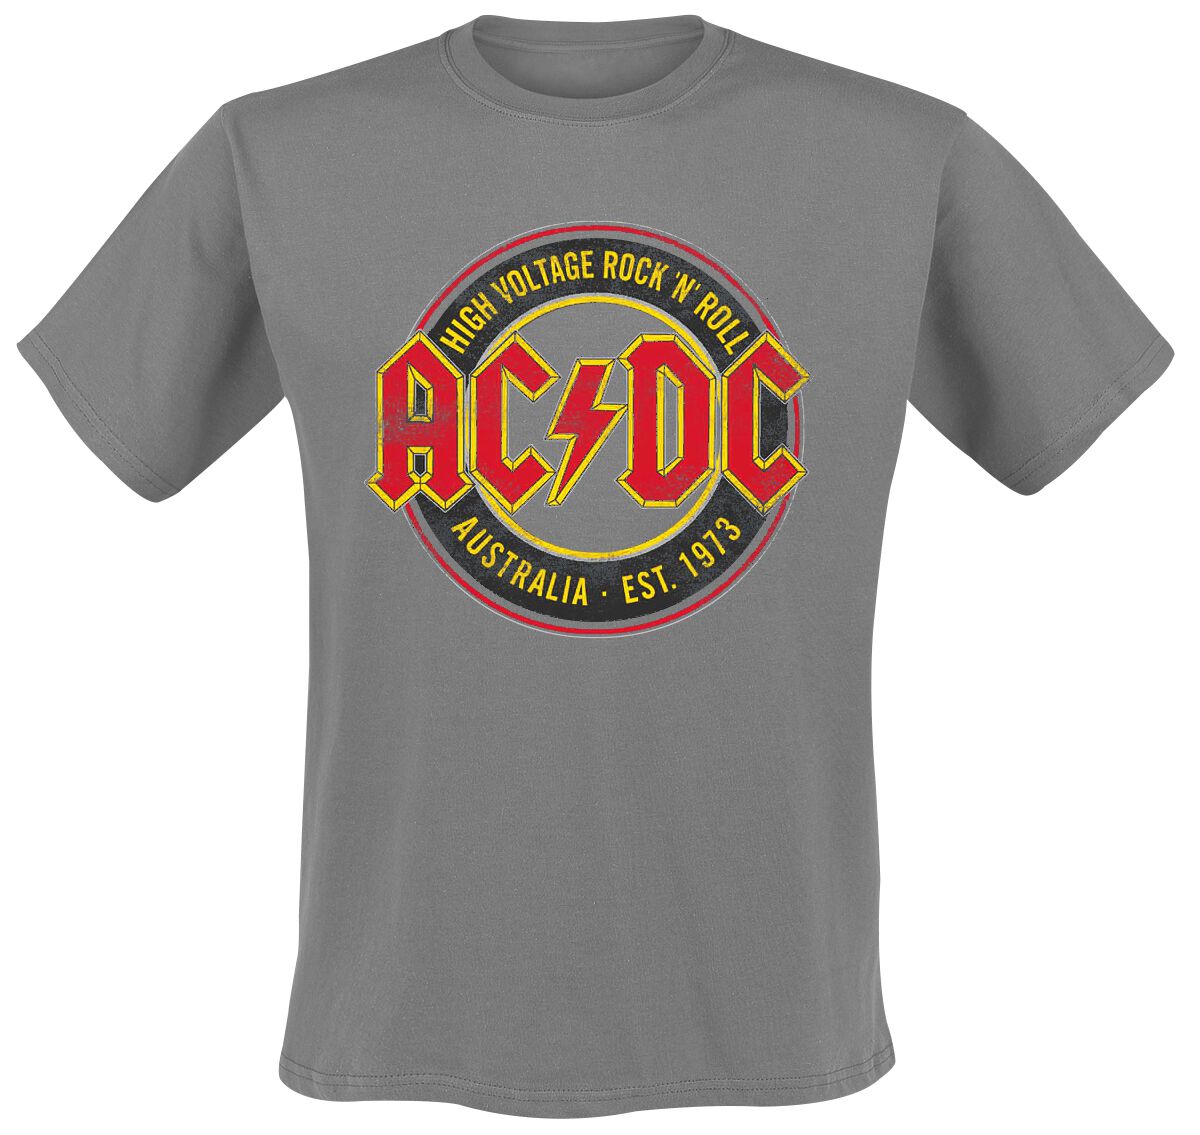 Image of T-Shirt di AC/DC - High Voltage - Rock 'N' Roll - Australia Est. 1973 - S a XXL - Uomo - grigio